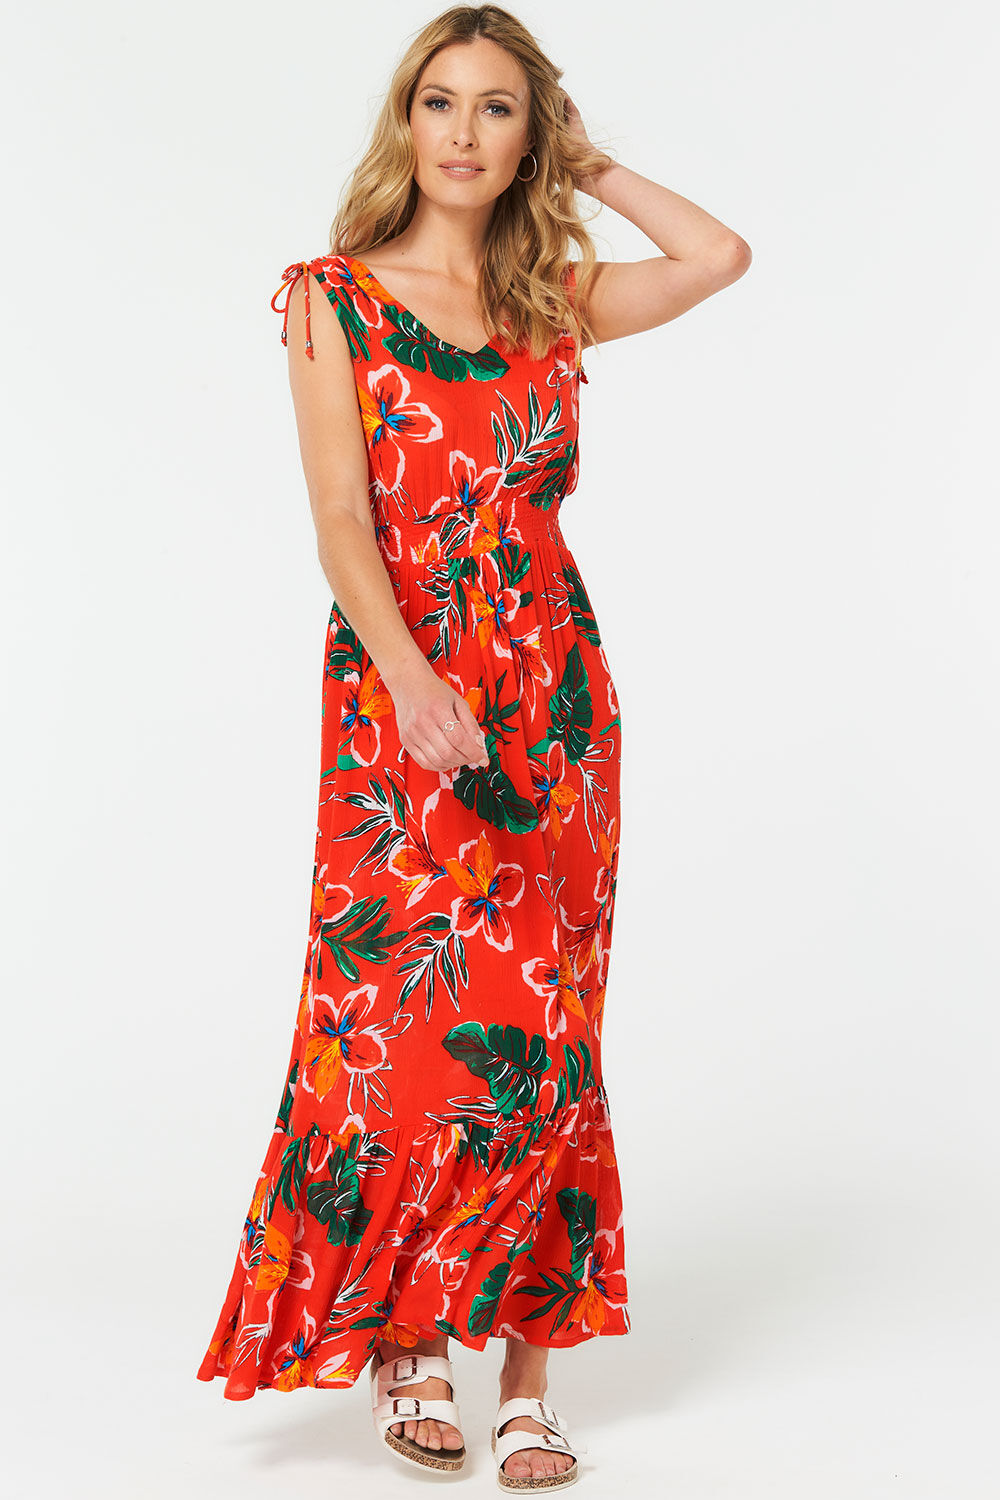 havana floral dress